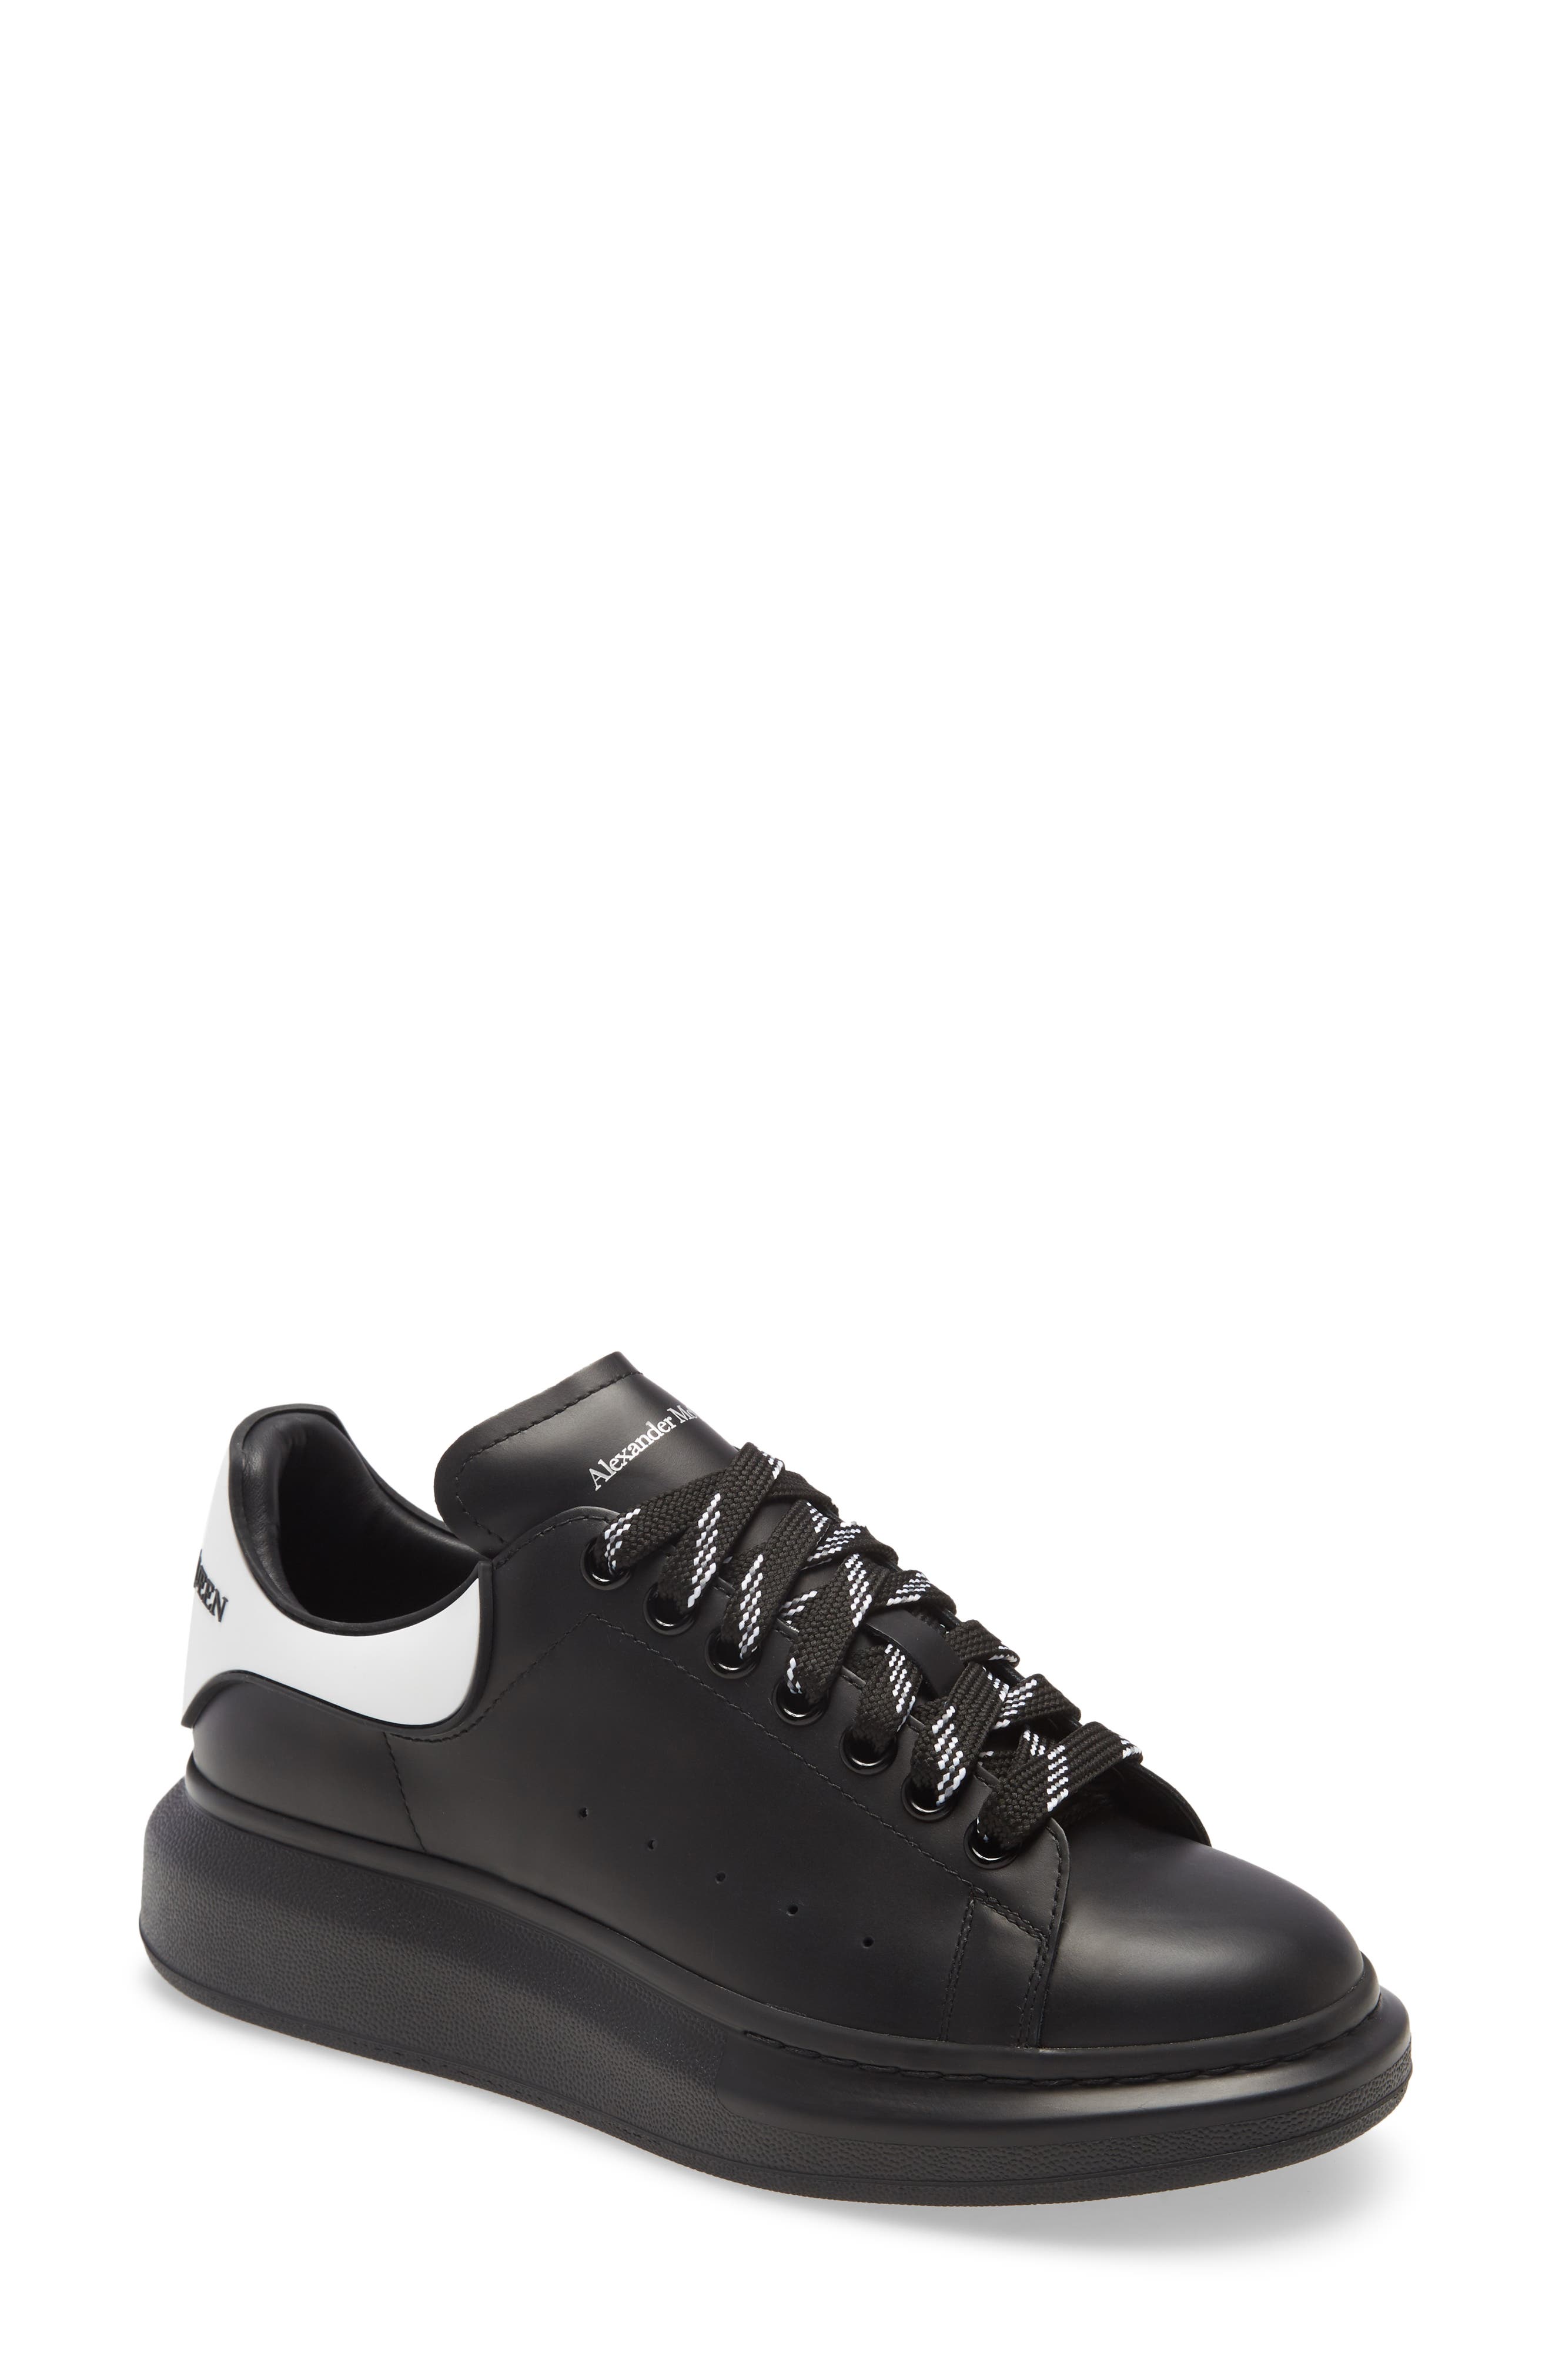 Alexander McQueen Oversize Sneaker in Black/White/Black